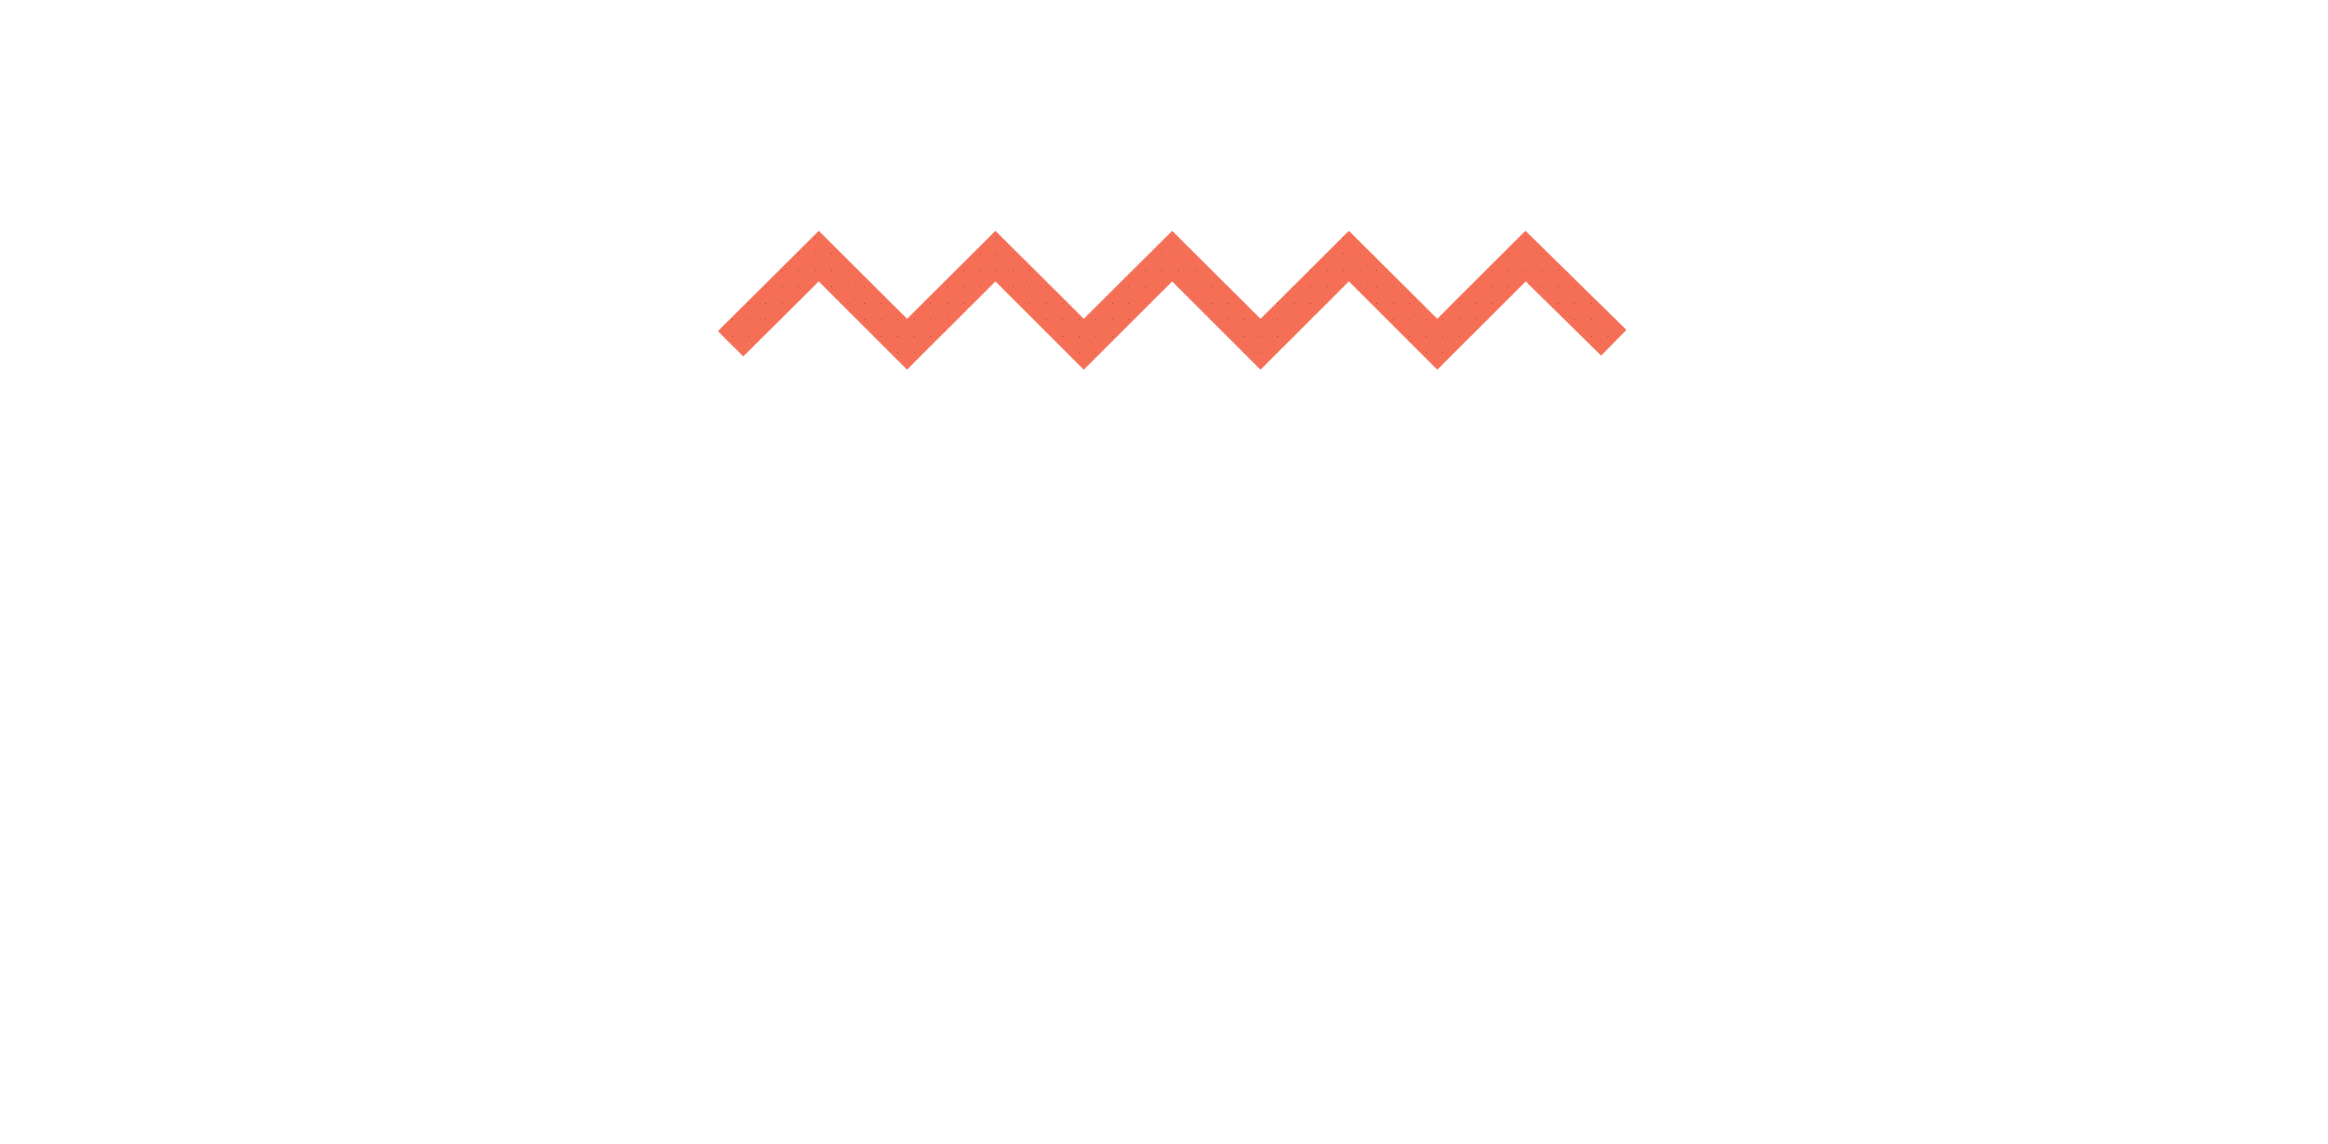 RakDog - Discover The Best